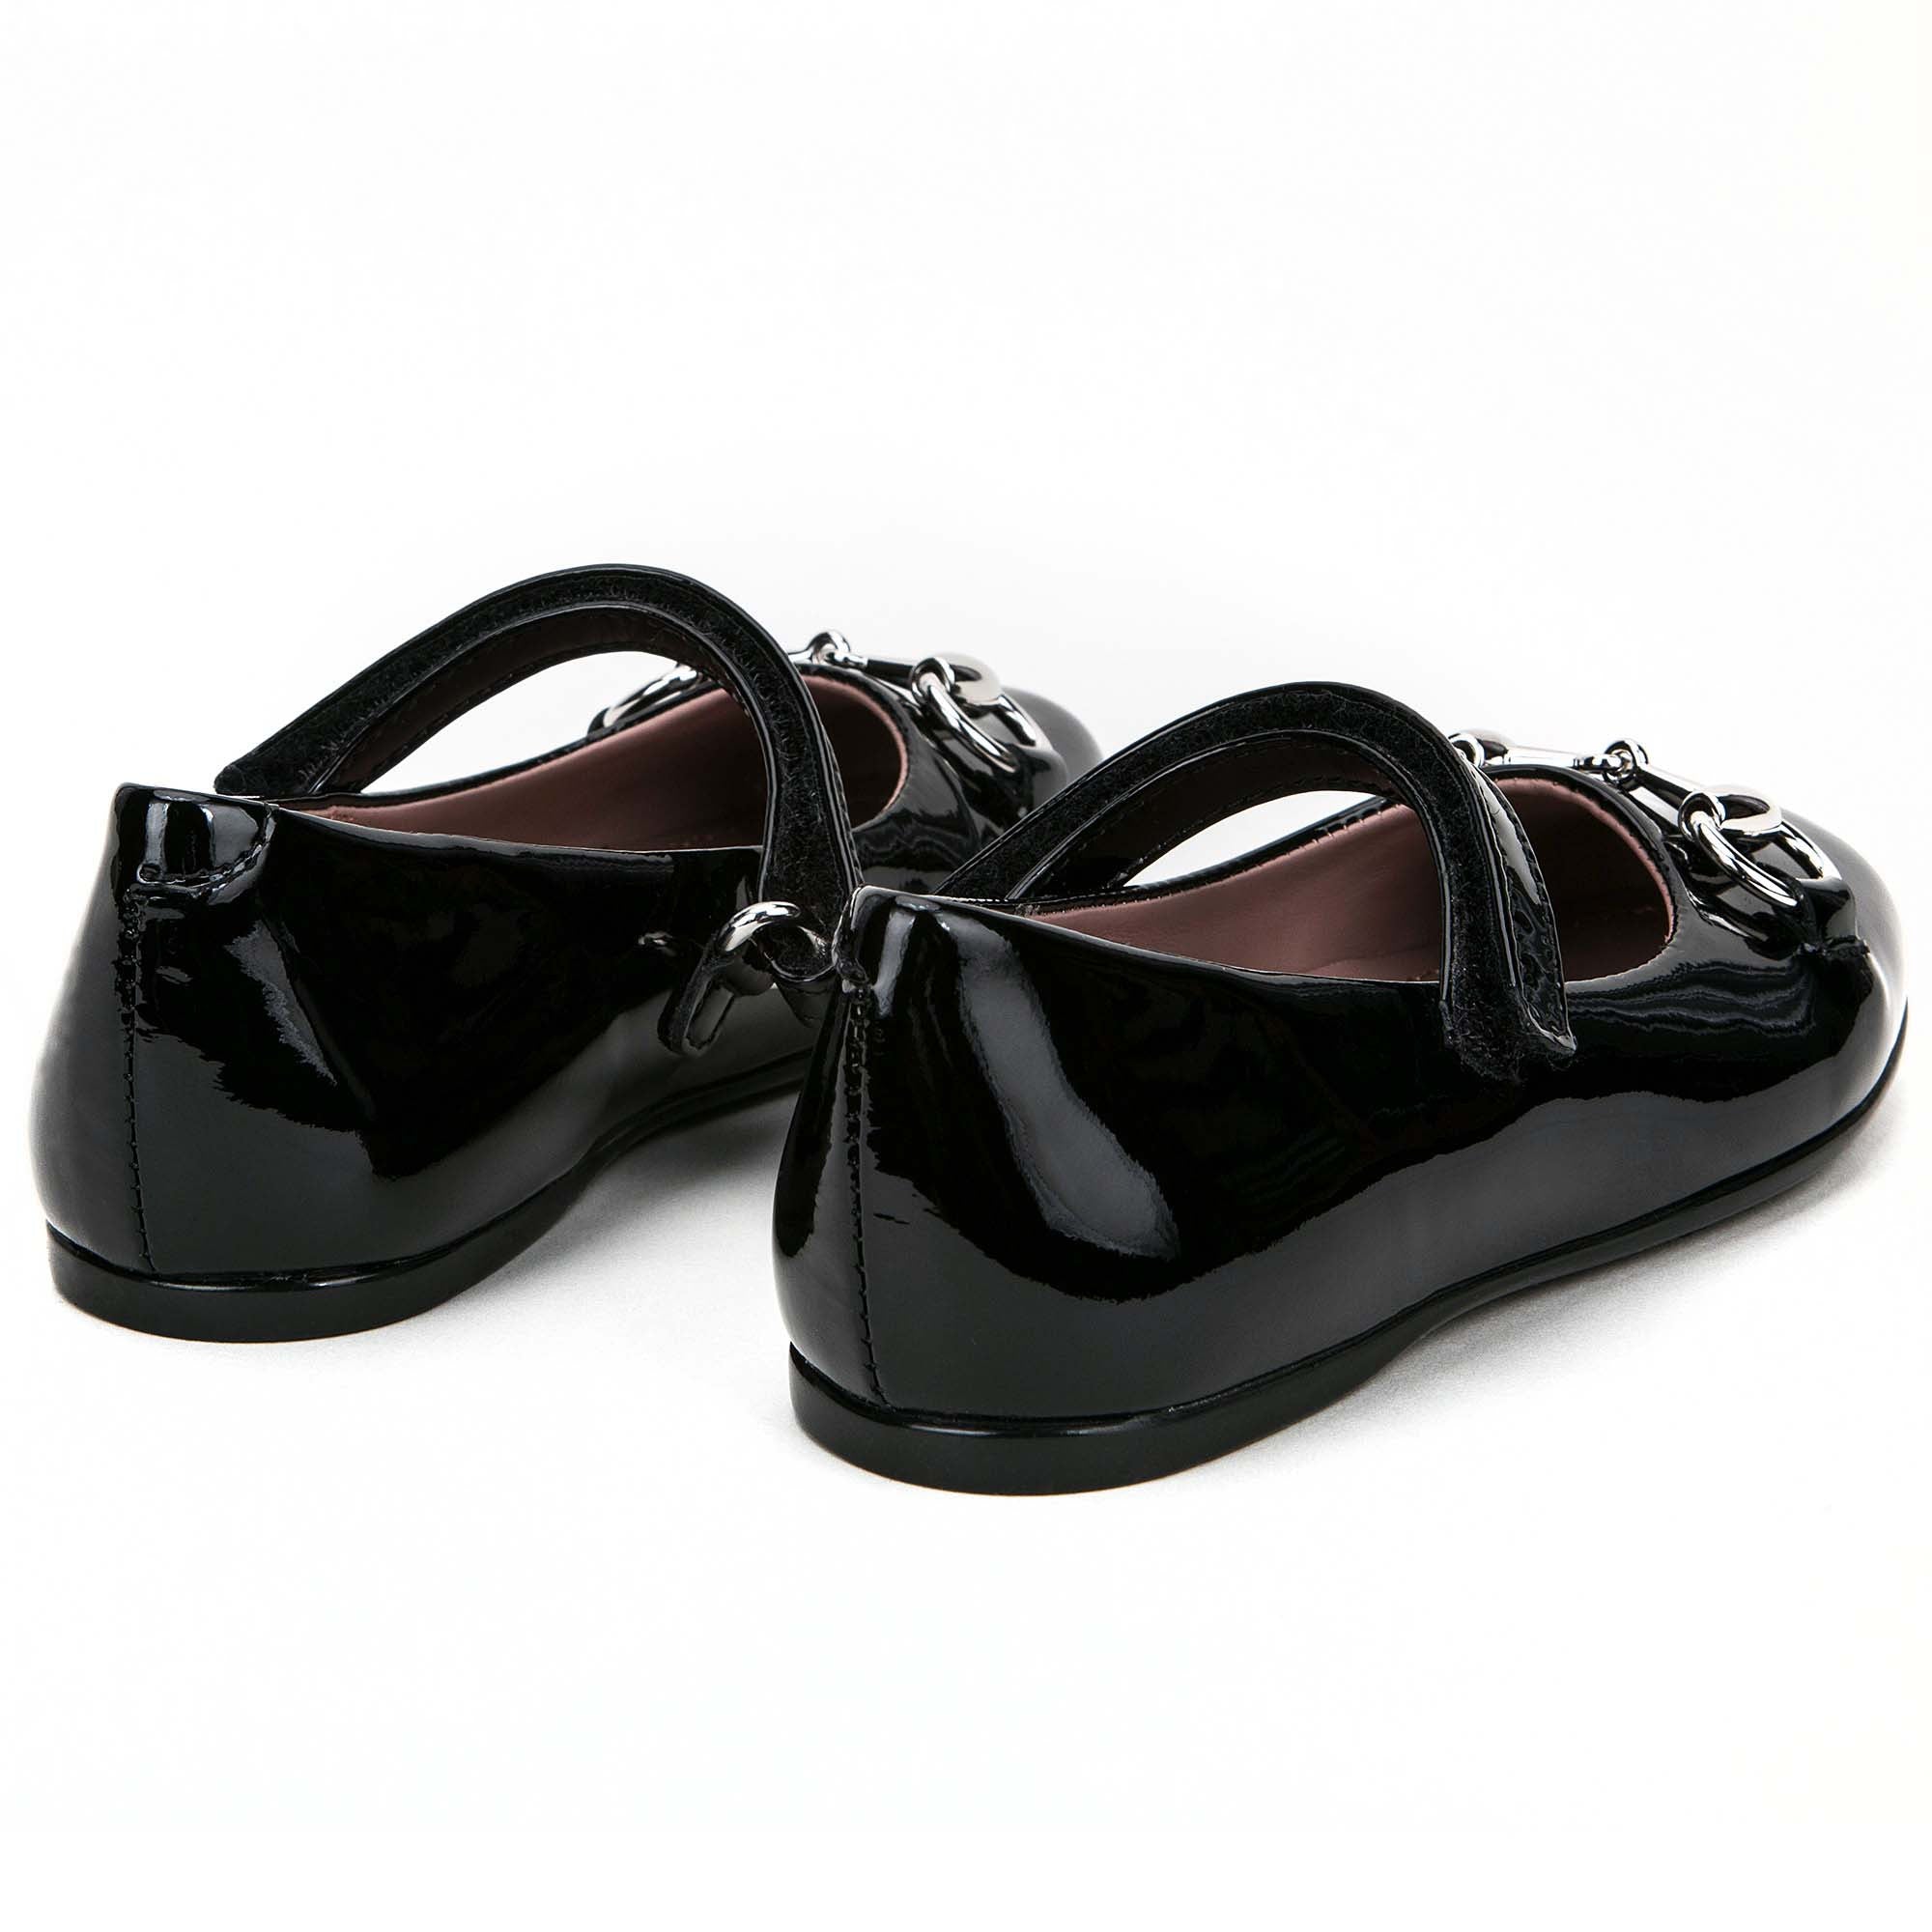 Girls Black Patent Leather Horsebit Shoes